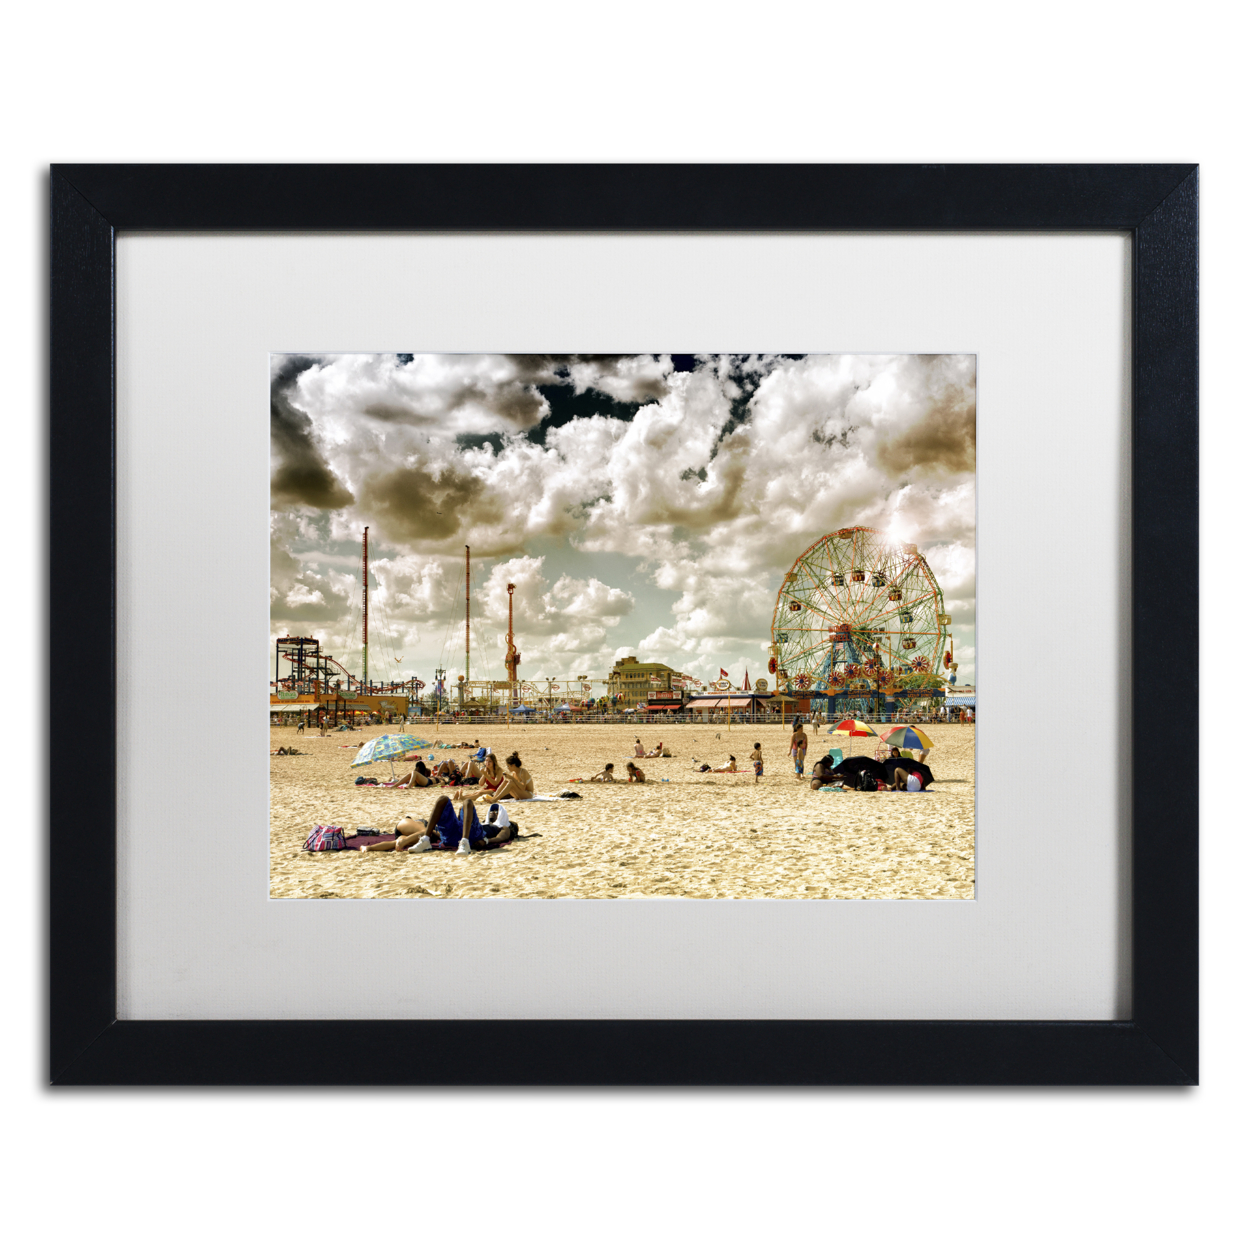 Philippe Hugonnard 'Coney Island Beach' Black Wooden Framed Art 18 X 22 Inches